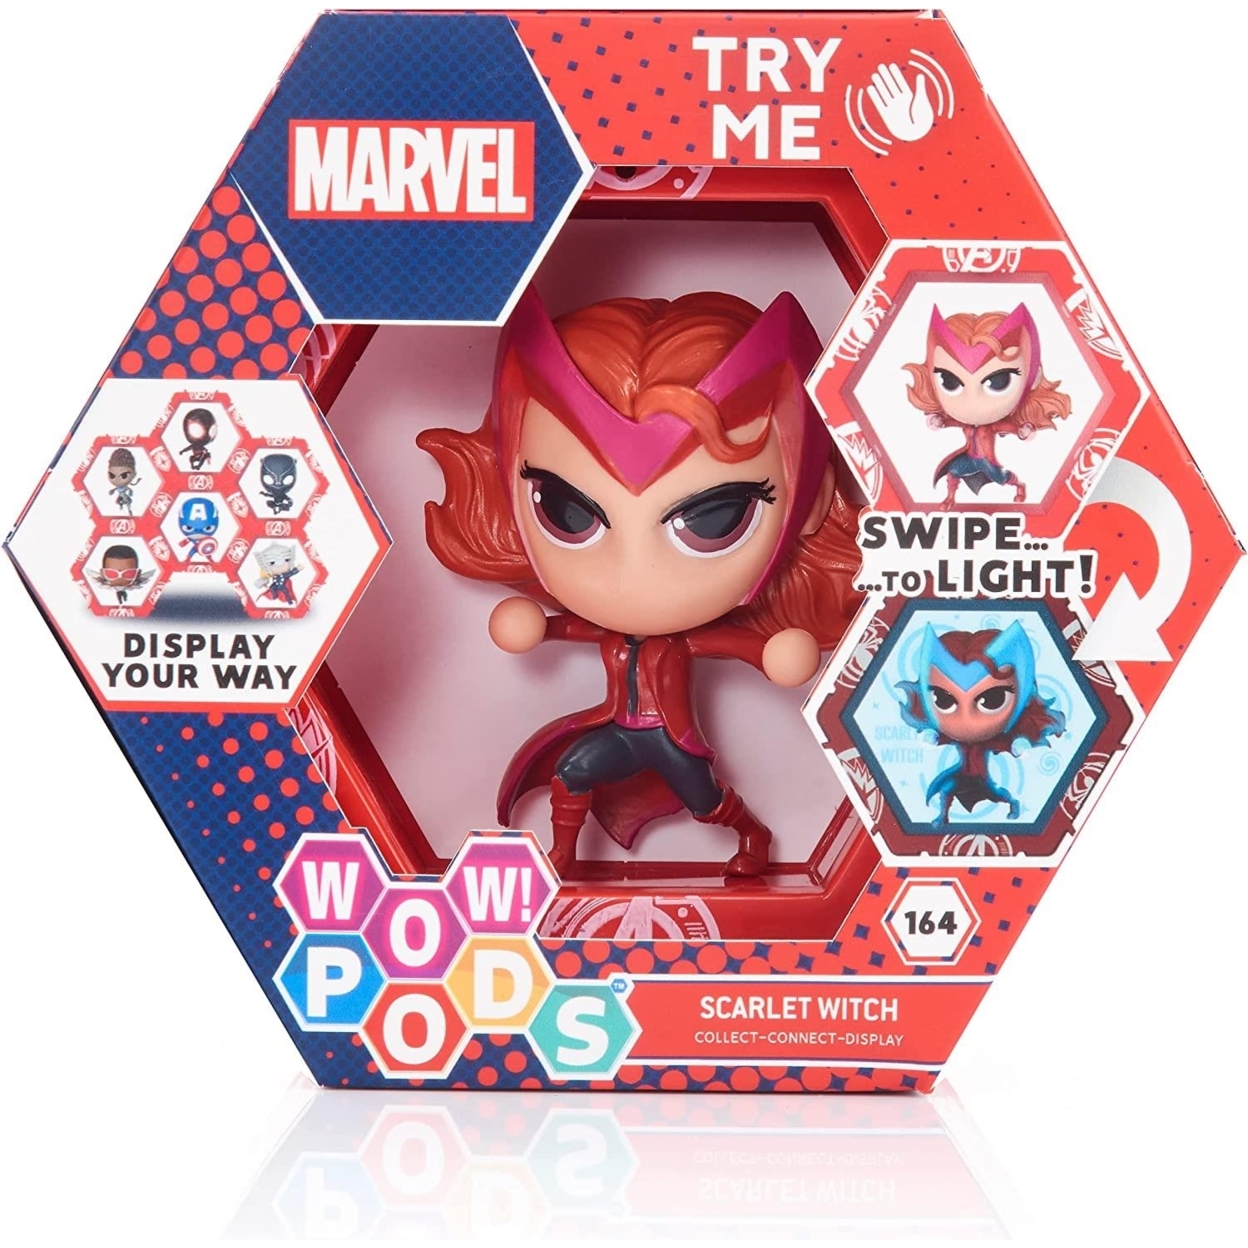 Avengers Scarlet Witch Wanda Maximoff Light-Up Figure Marvel Superhero Disney WOW! Stuff